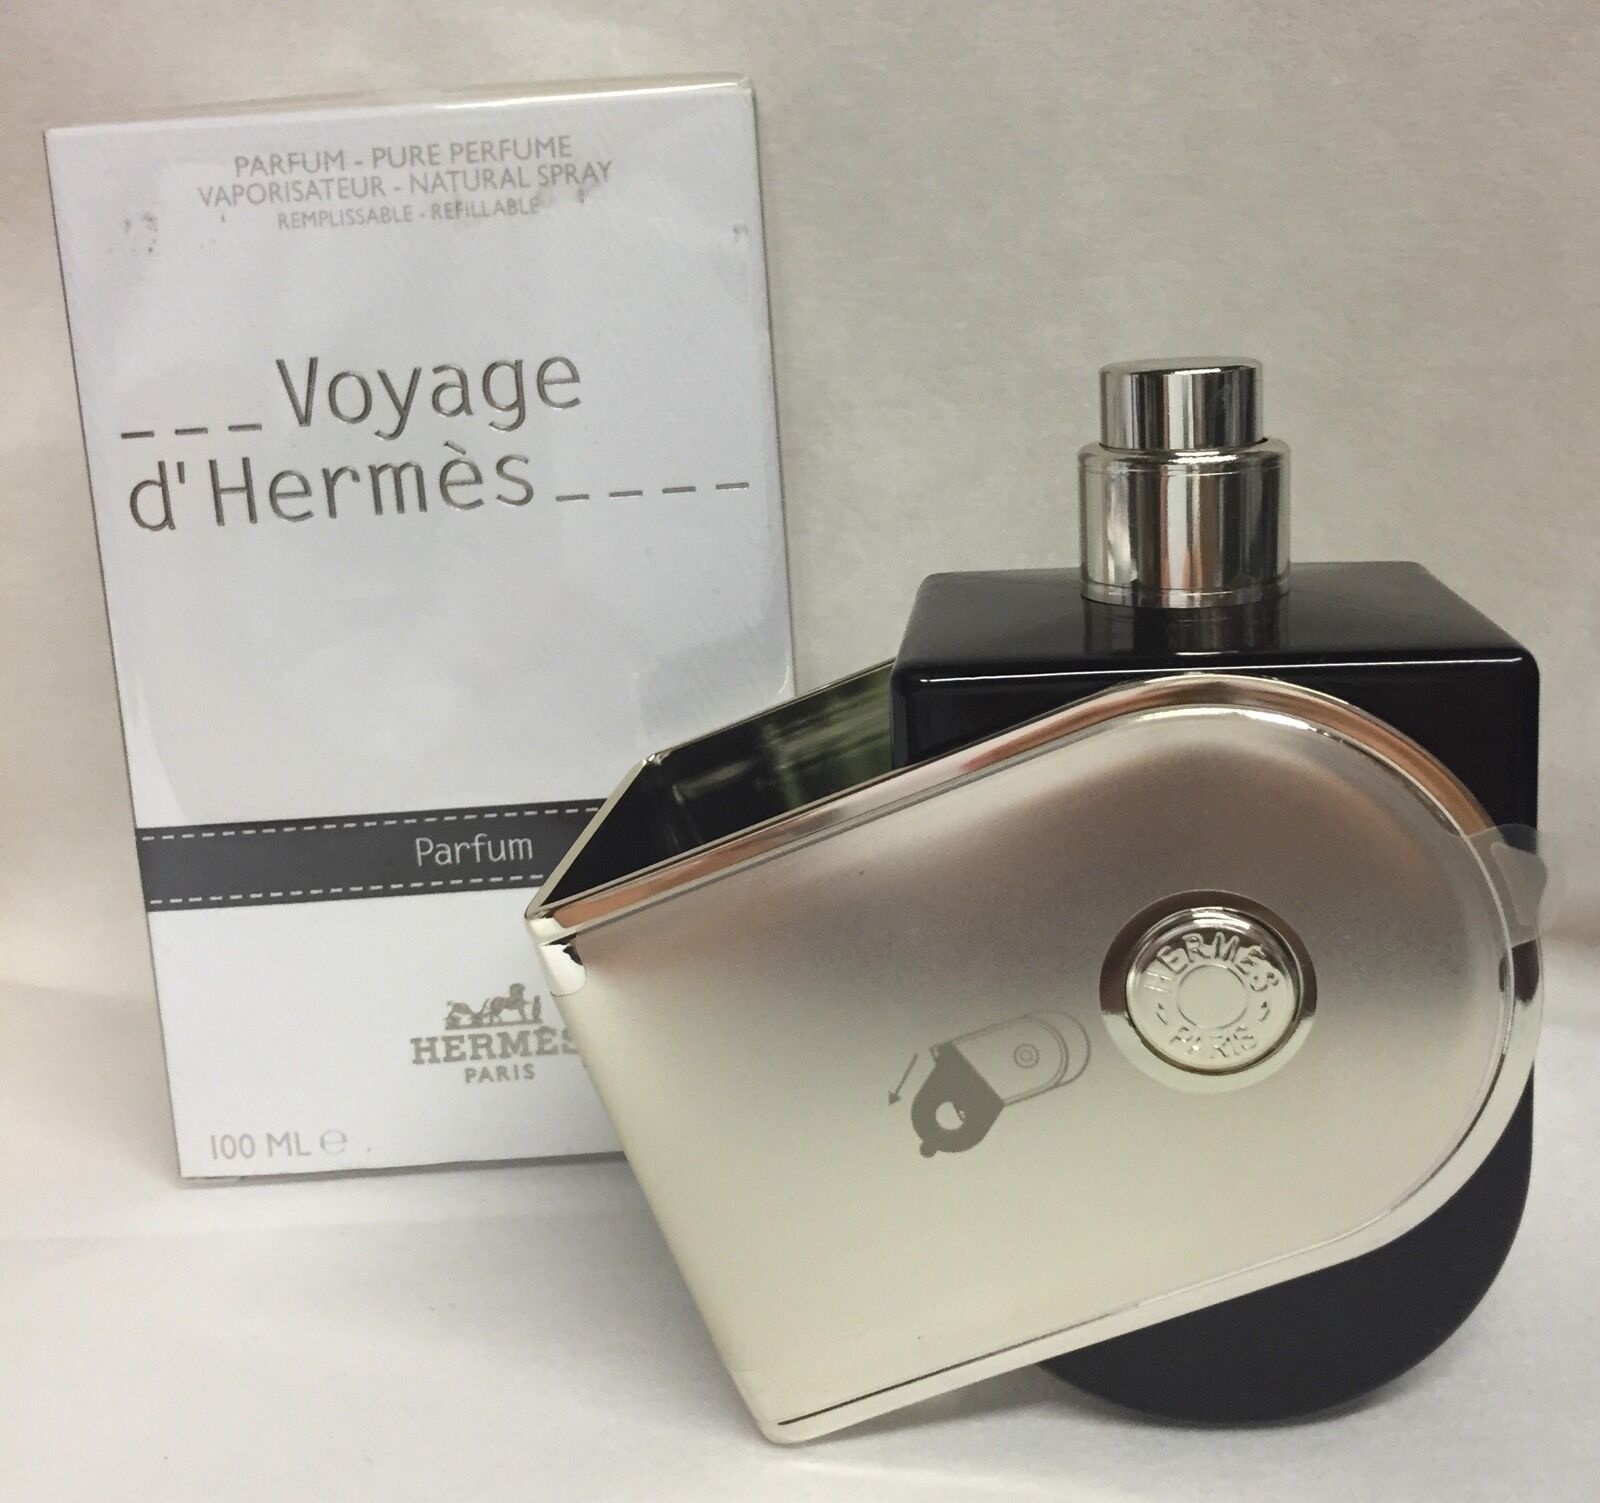 Hermes Paris Voyage d' Hermes 3.3oz Pure Perfume Natural Spray ...